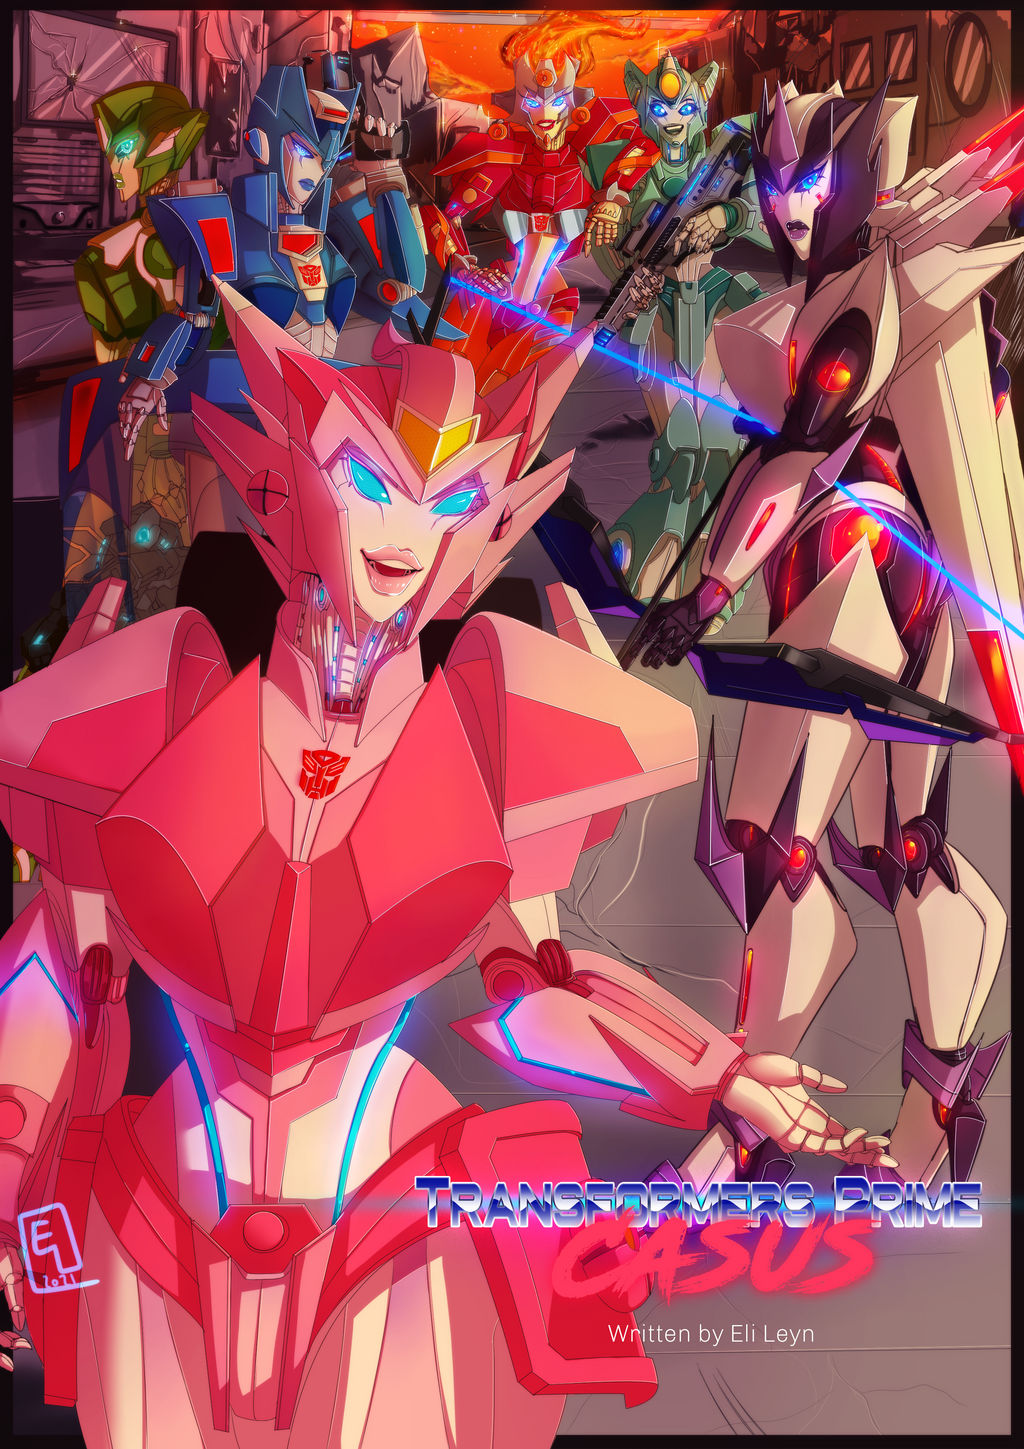 Transformers prime decepticon by GoddessMechanic on deviantART